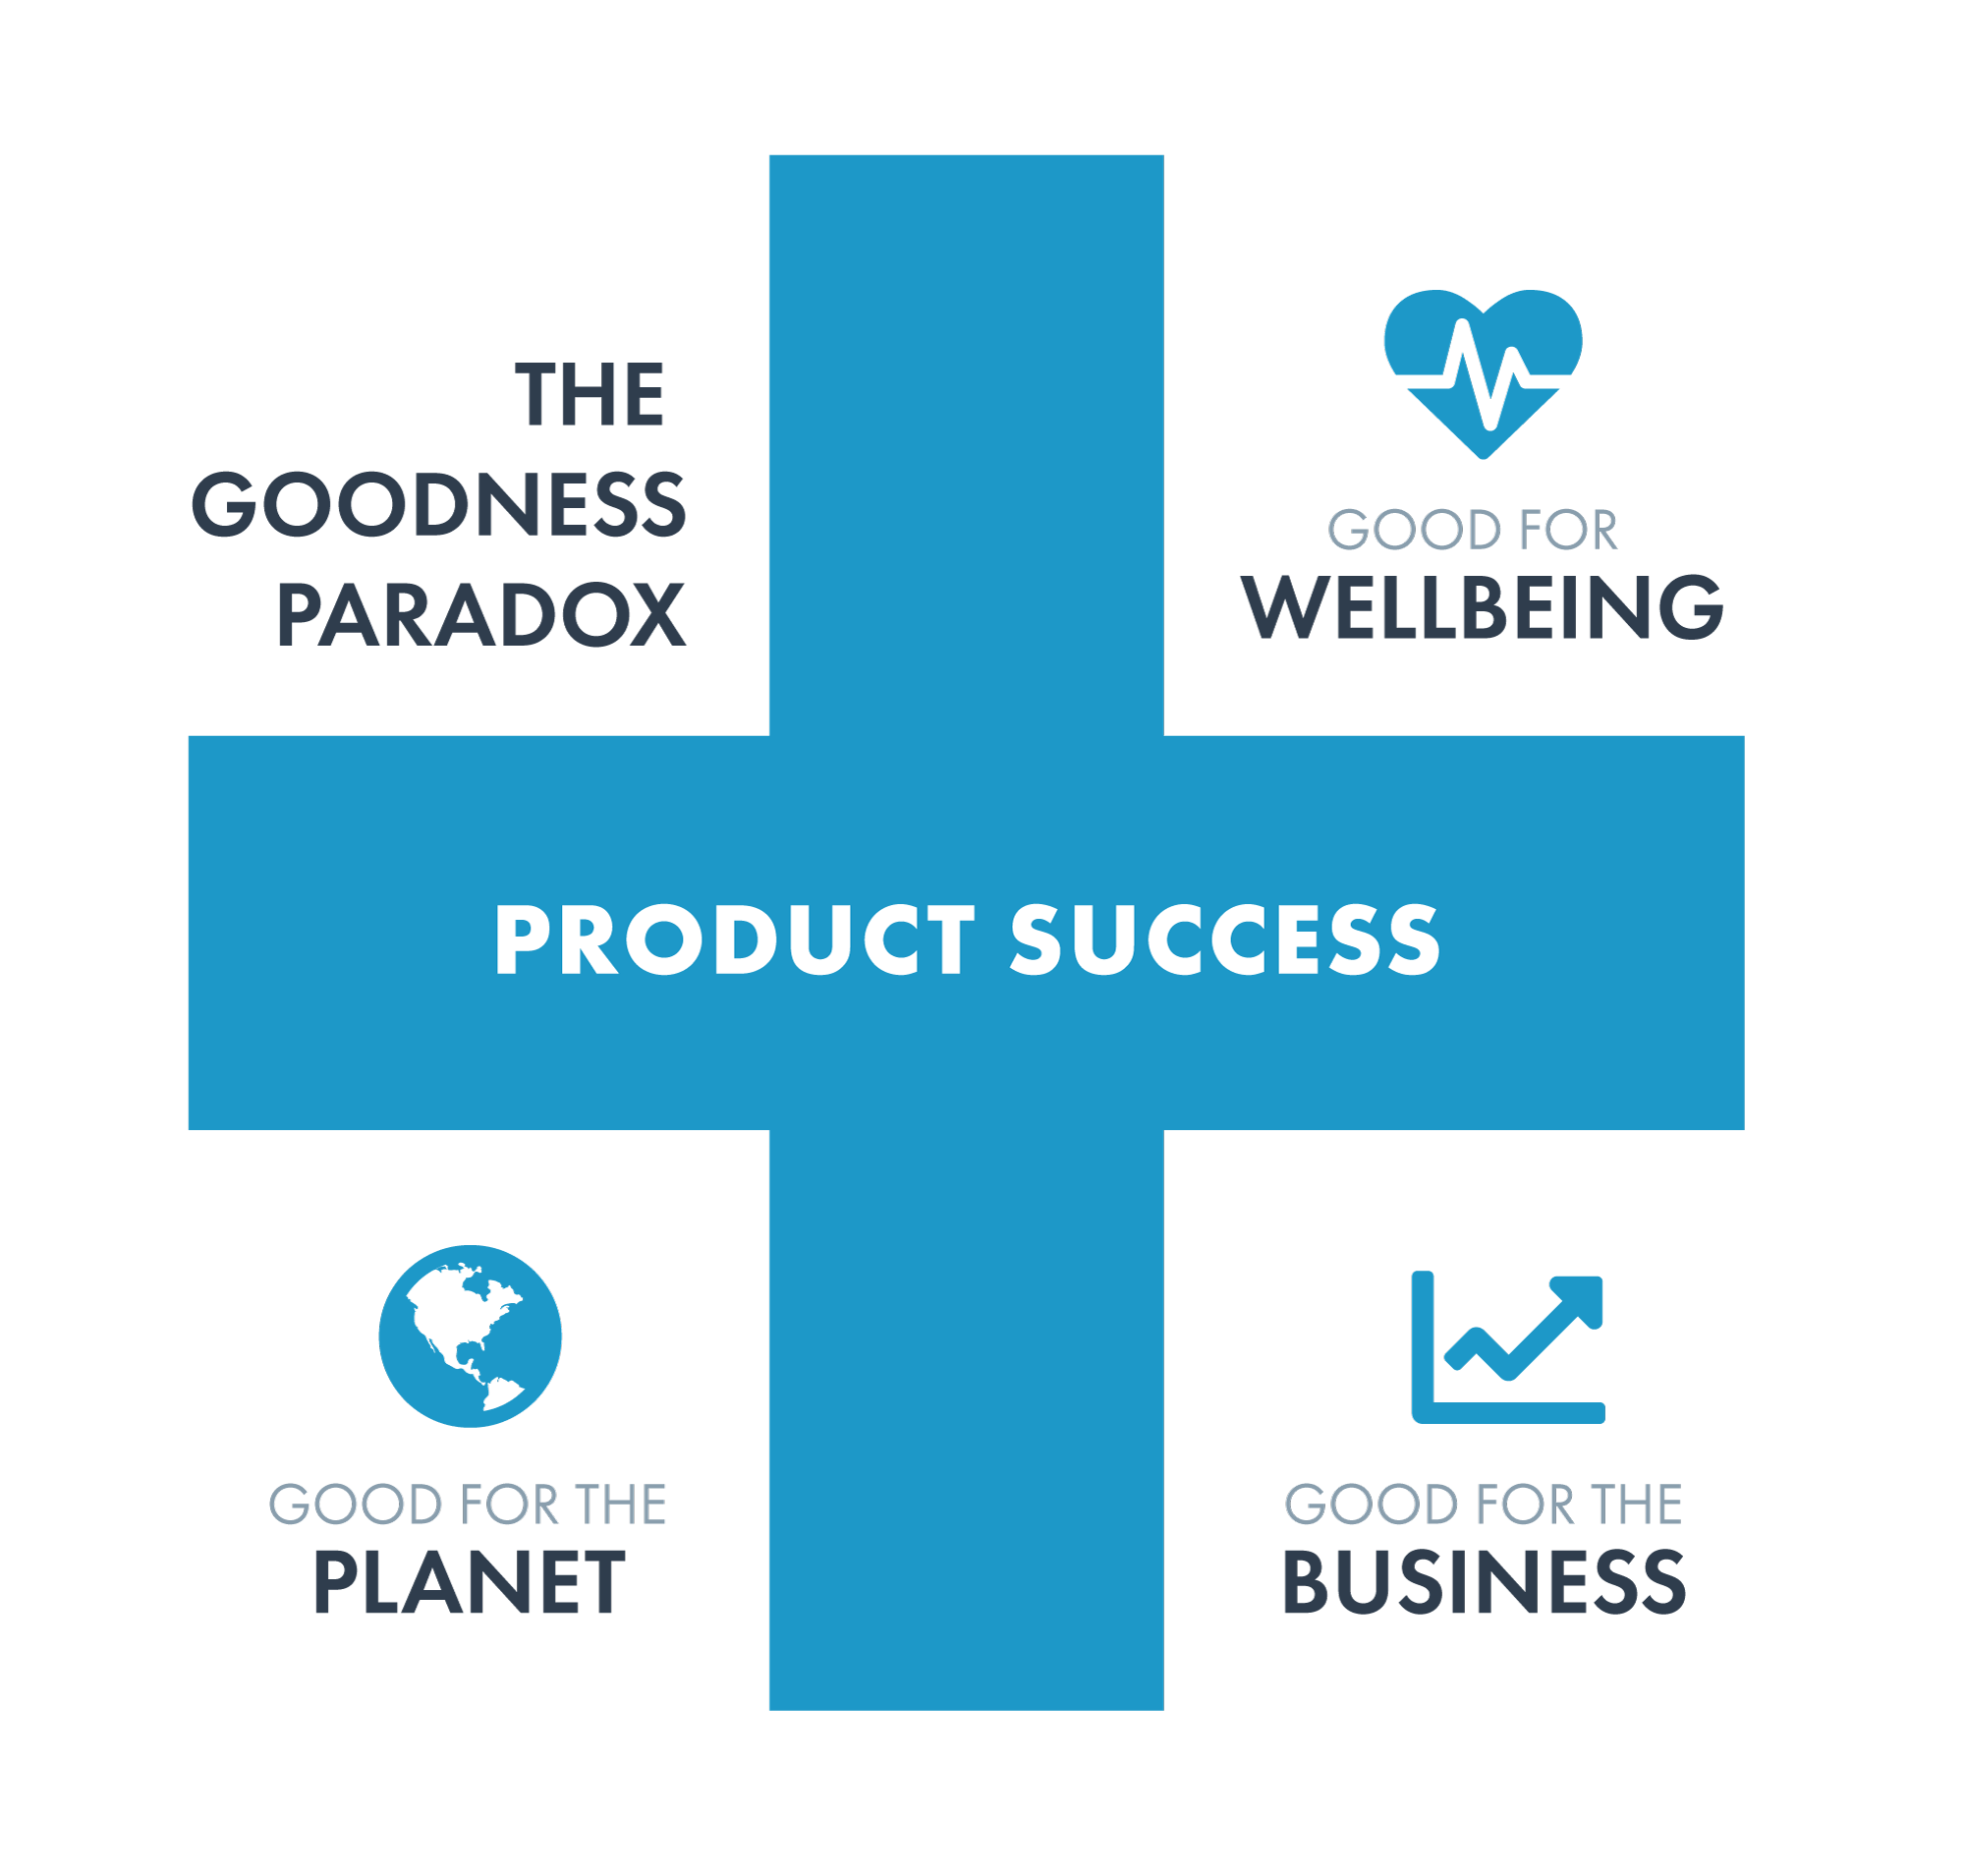 Visual presentation of the Goodness Paradox